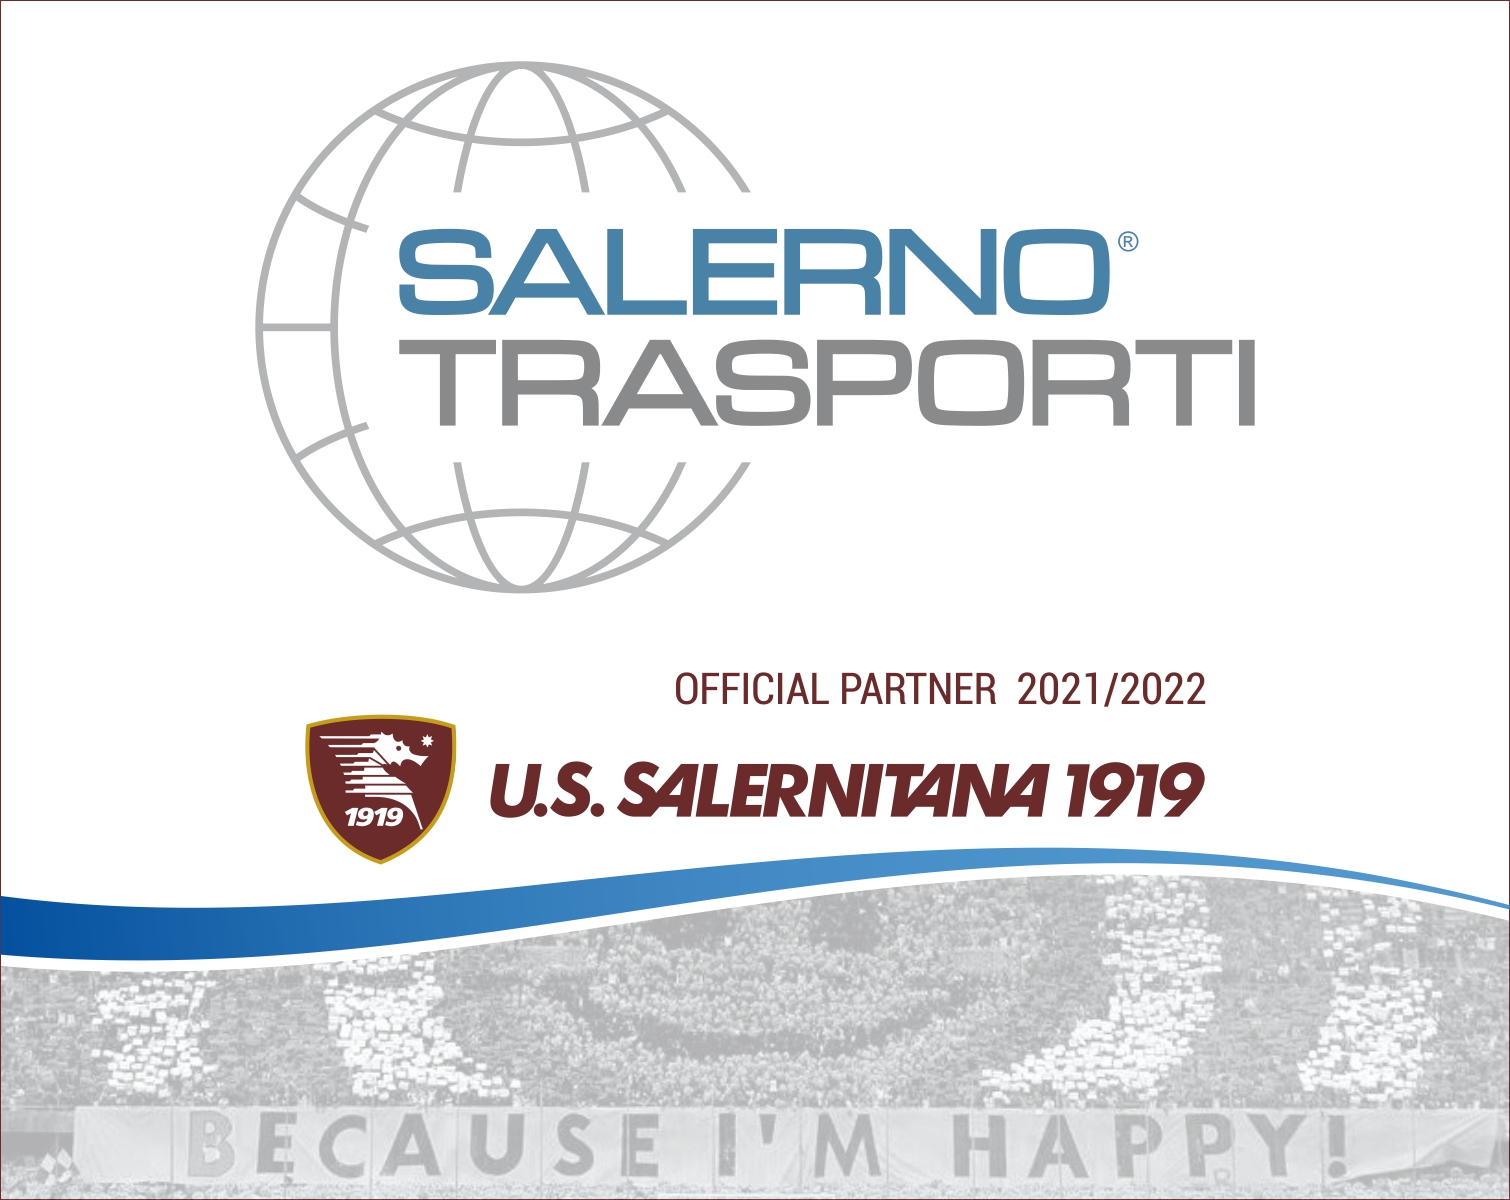 Salerno Trasporti Official Partner della Salernitana